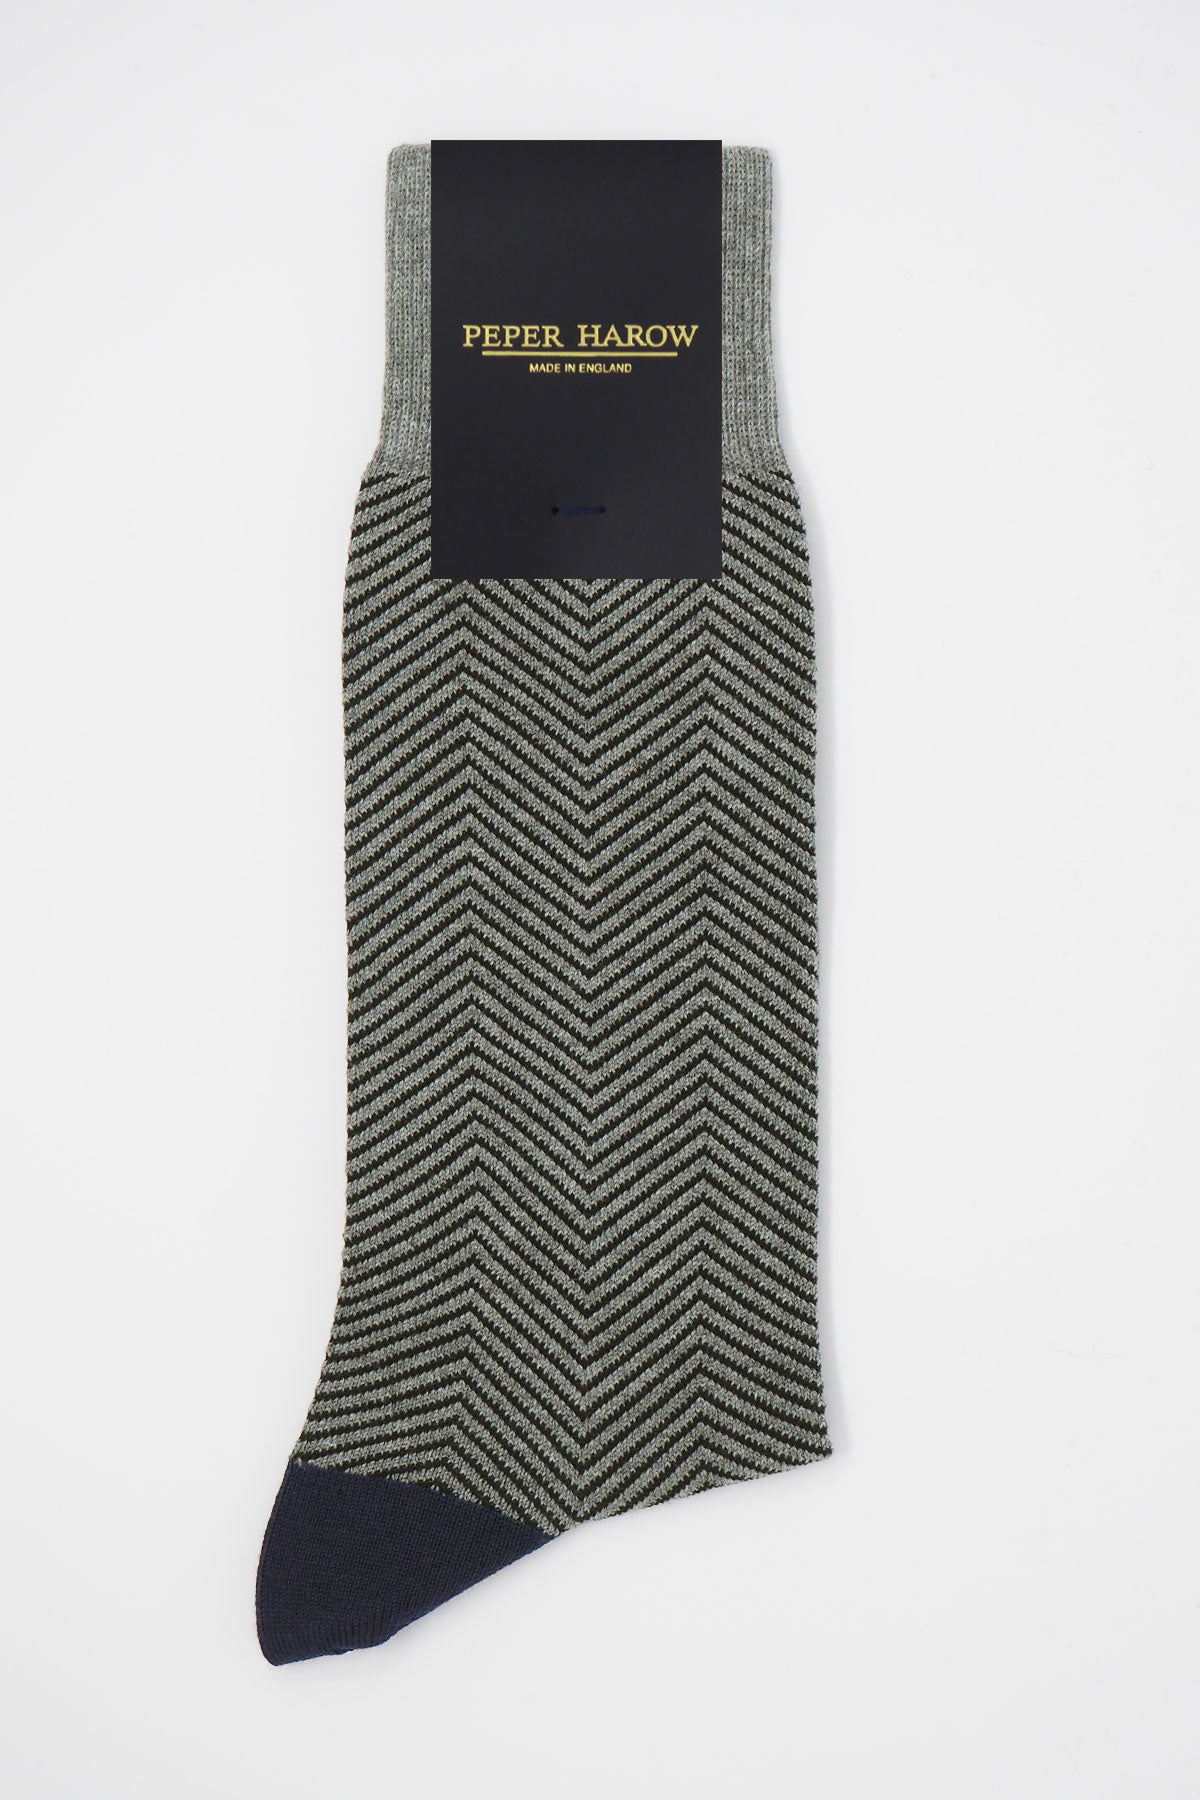 Lux Taylor Men's Socks - Grey – Peper Harow